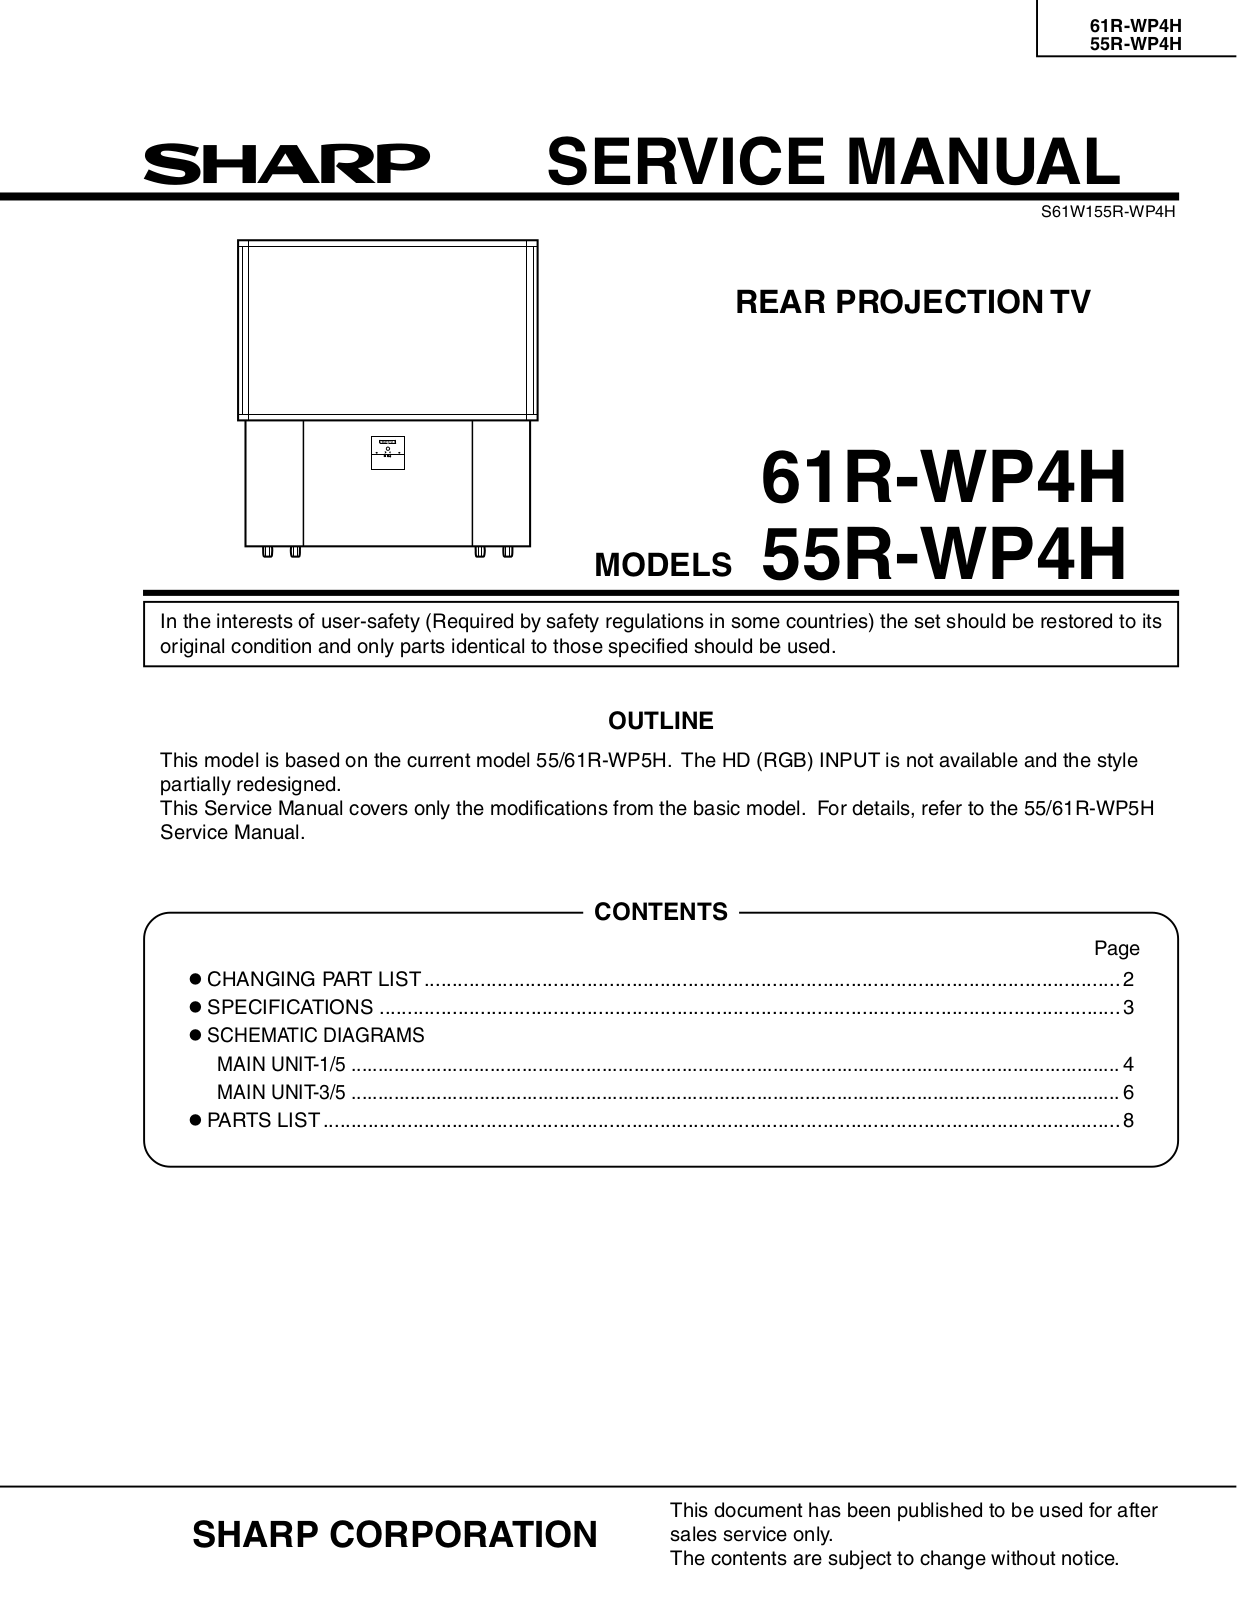 SHARP 55-61RWP4H, 61R-WP4H, 55R-WP4H Service Manual